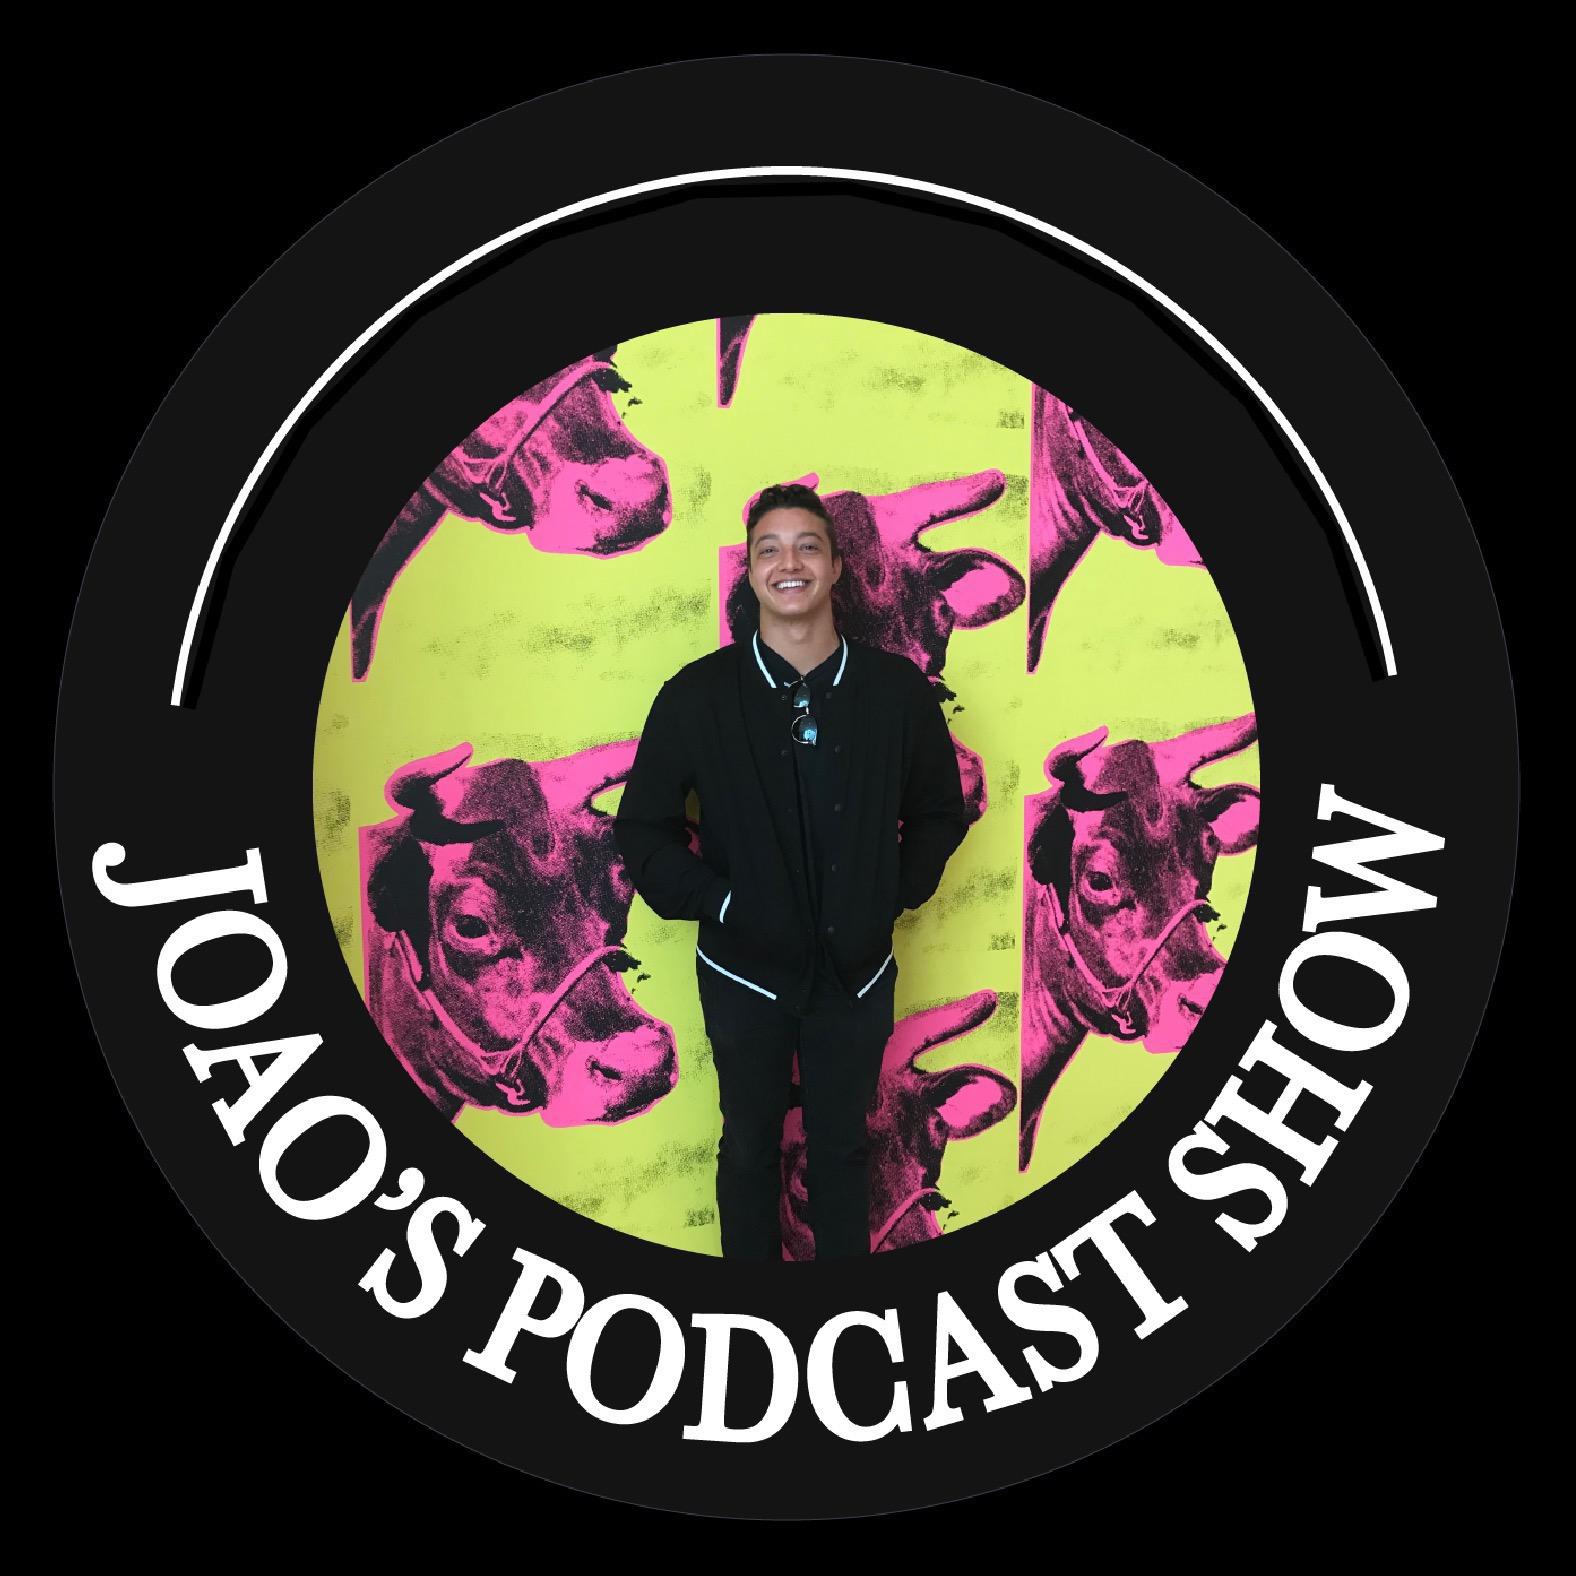 Joao's Podcast Show